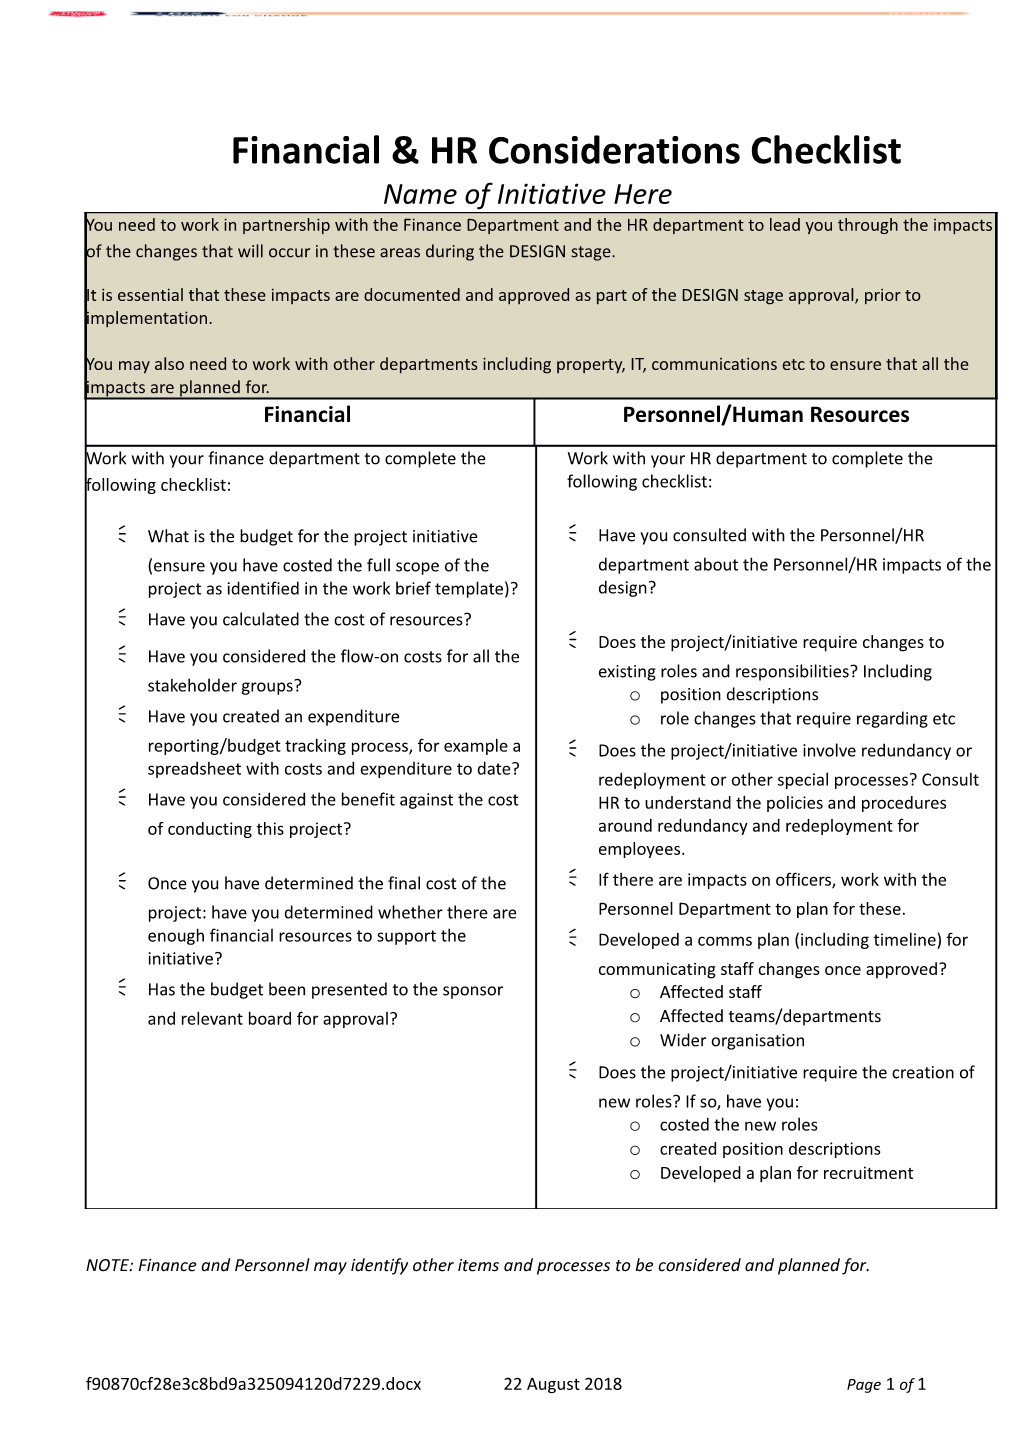 Financial & HR Considerations Checklist